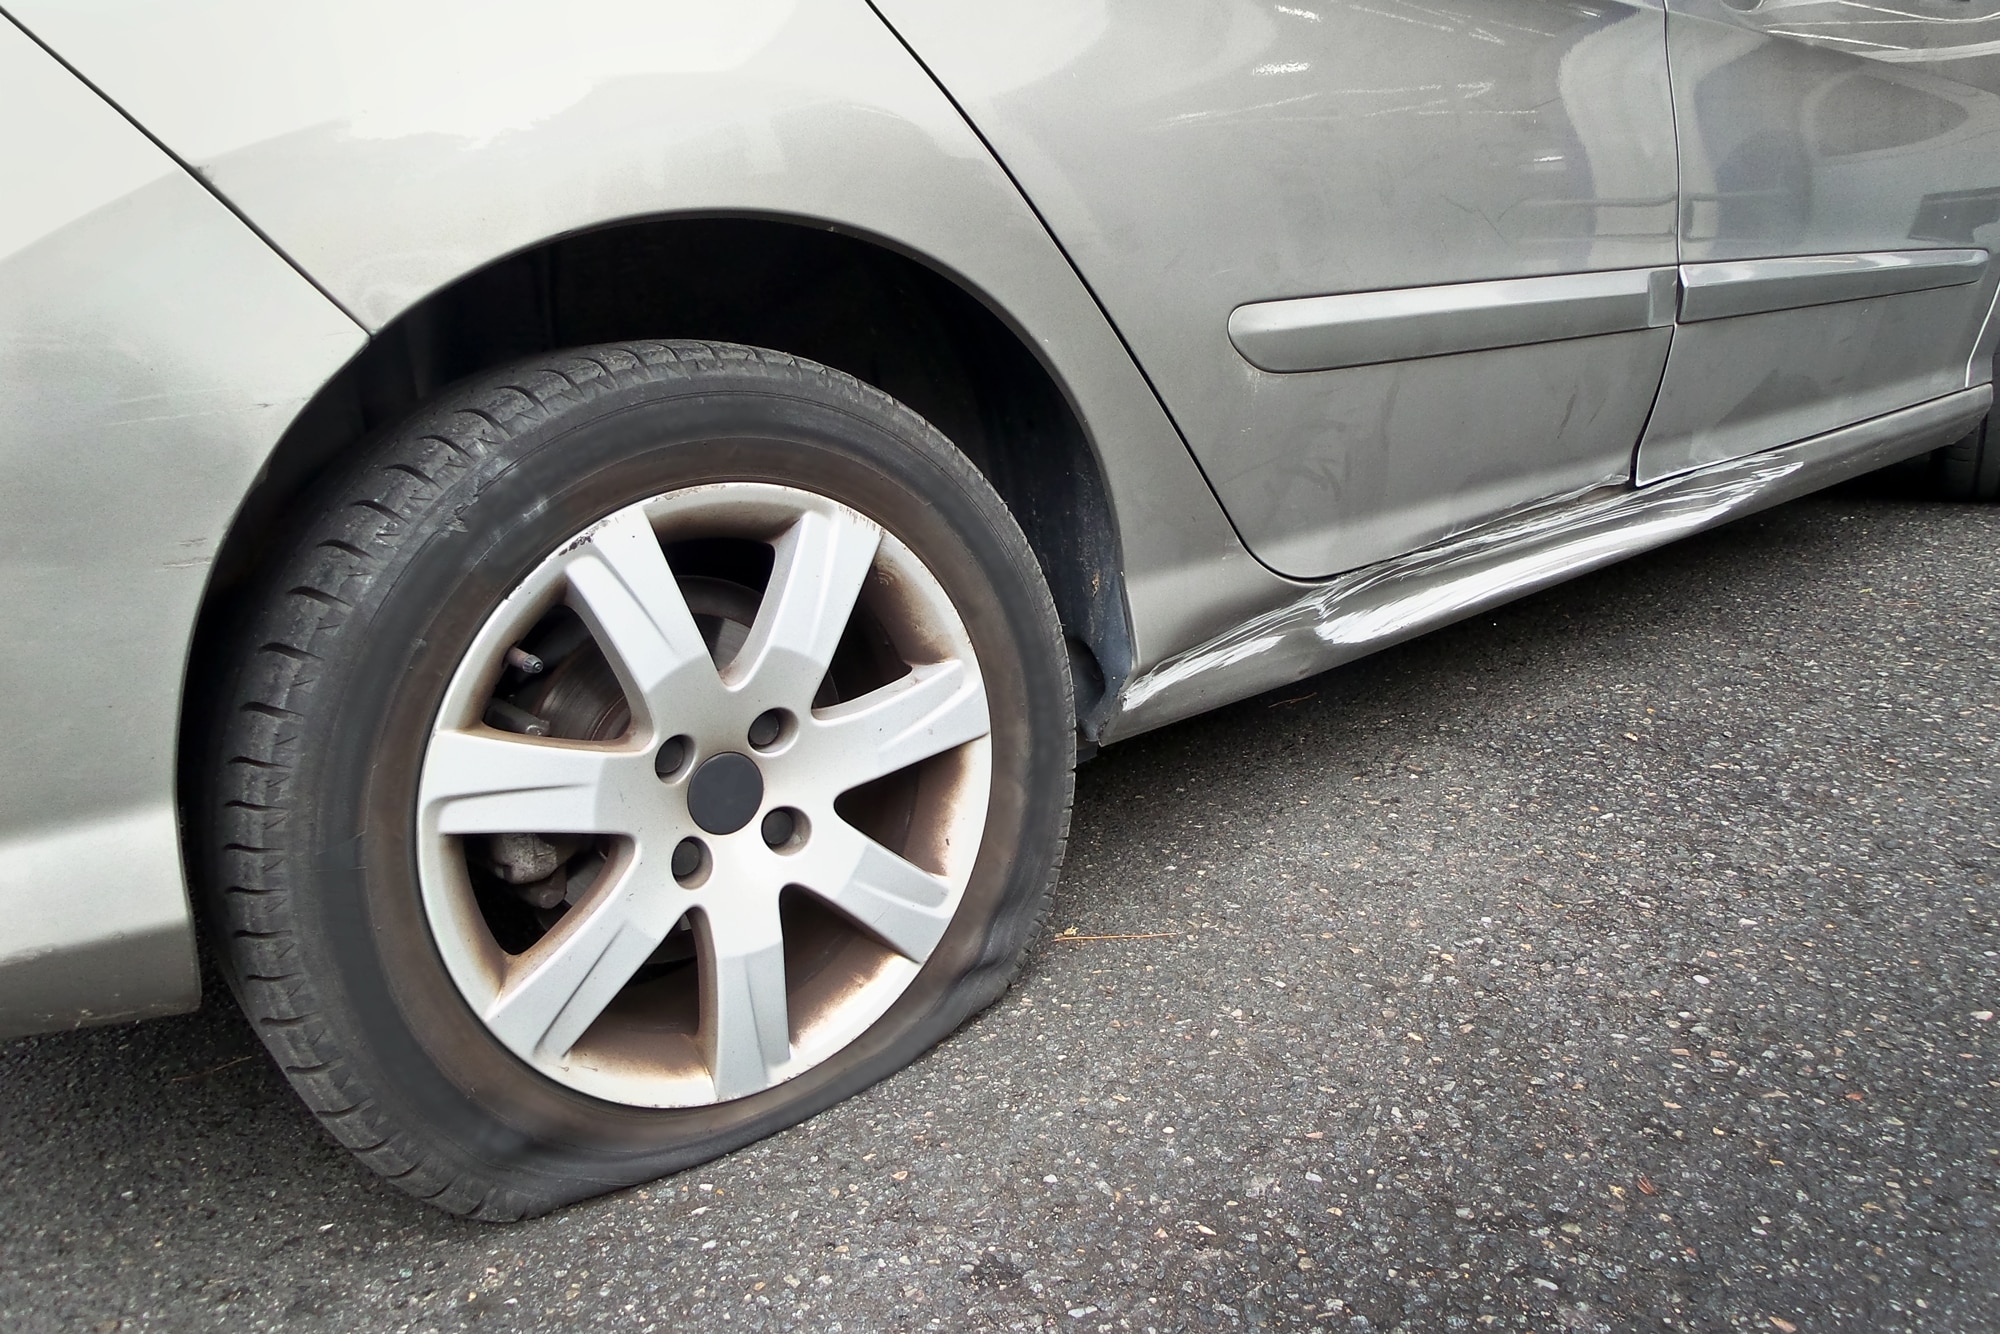 Flat rear tire on a silver car